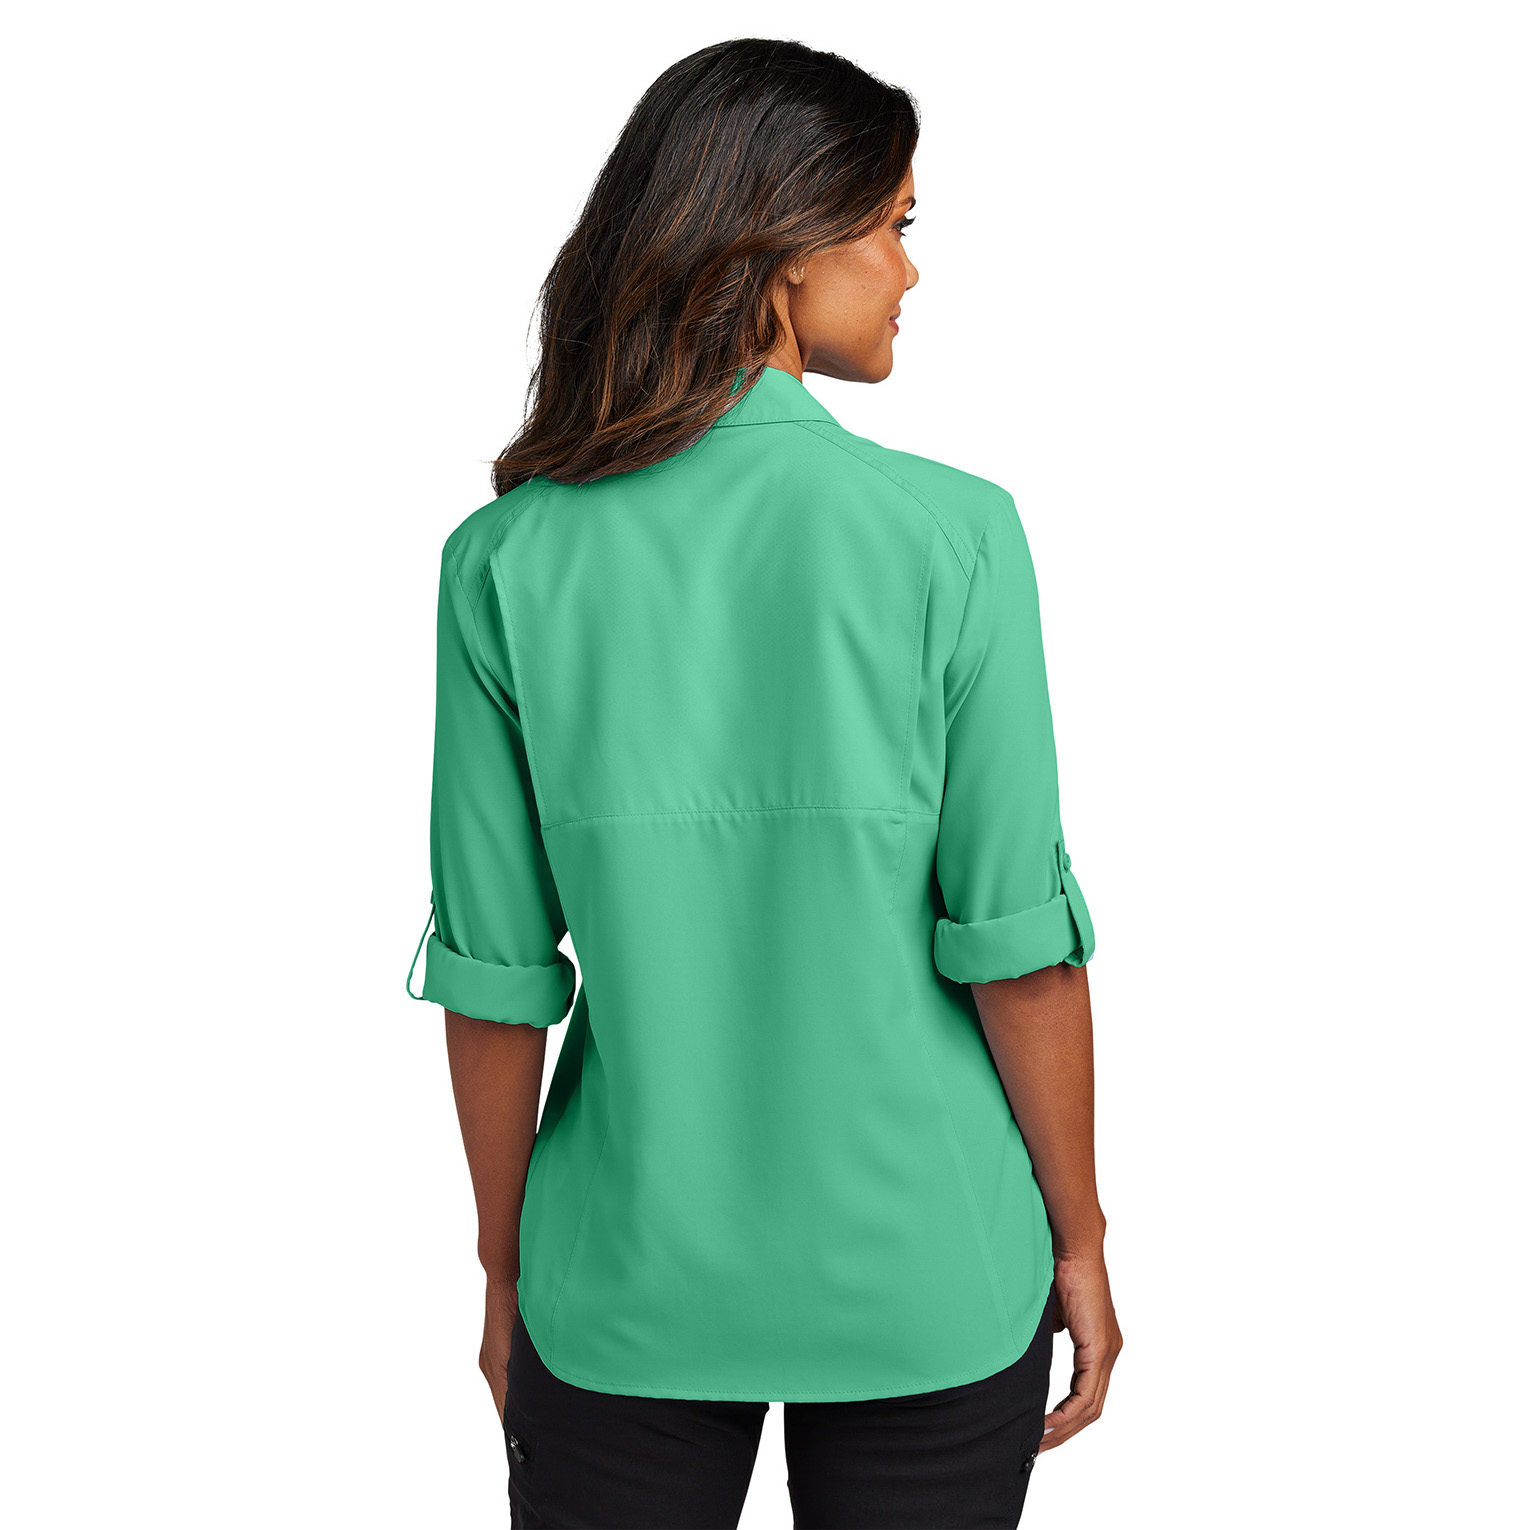 Port Authority LW960 Ladies Long Sleeve UV Daybreak Shirt - Bright Seafoam, L